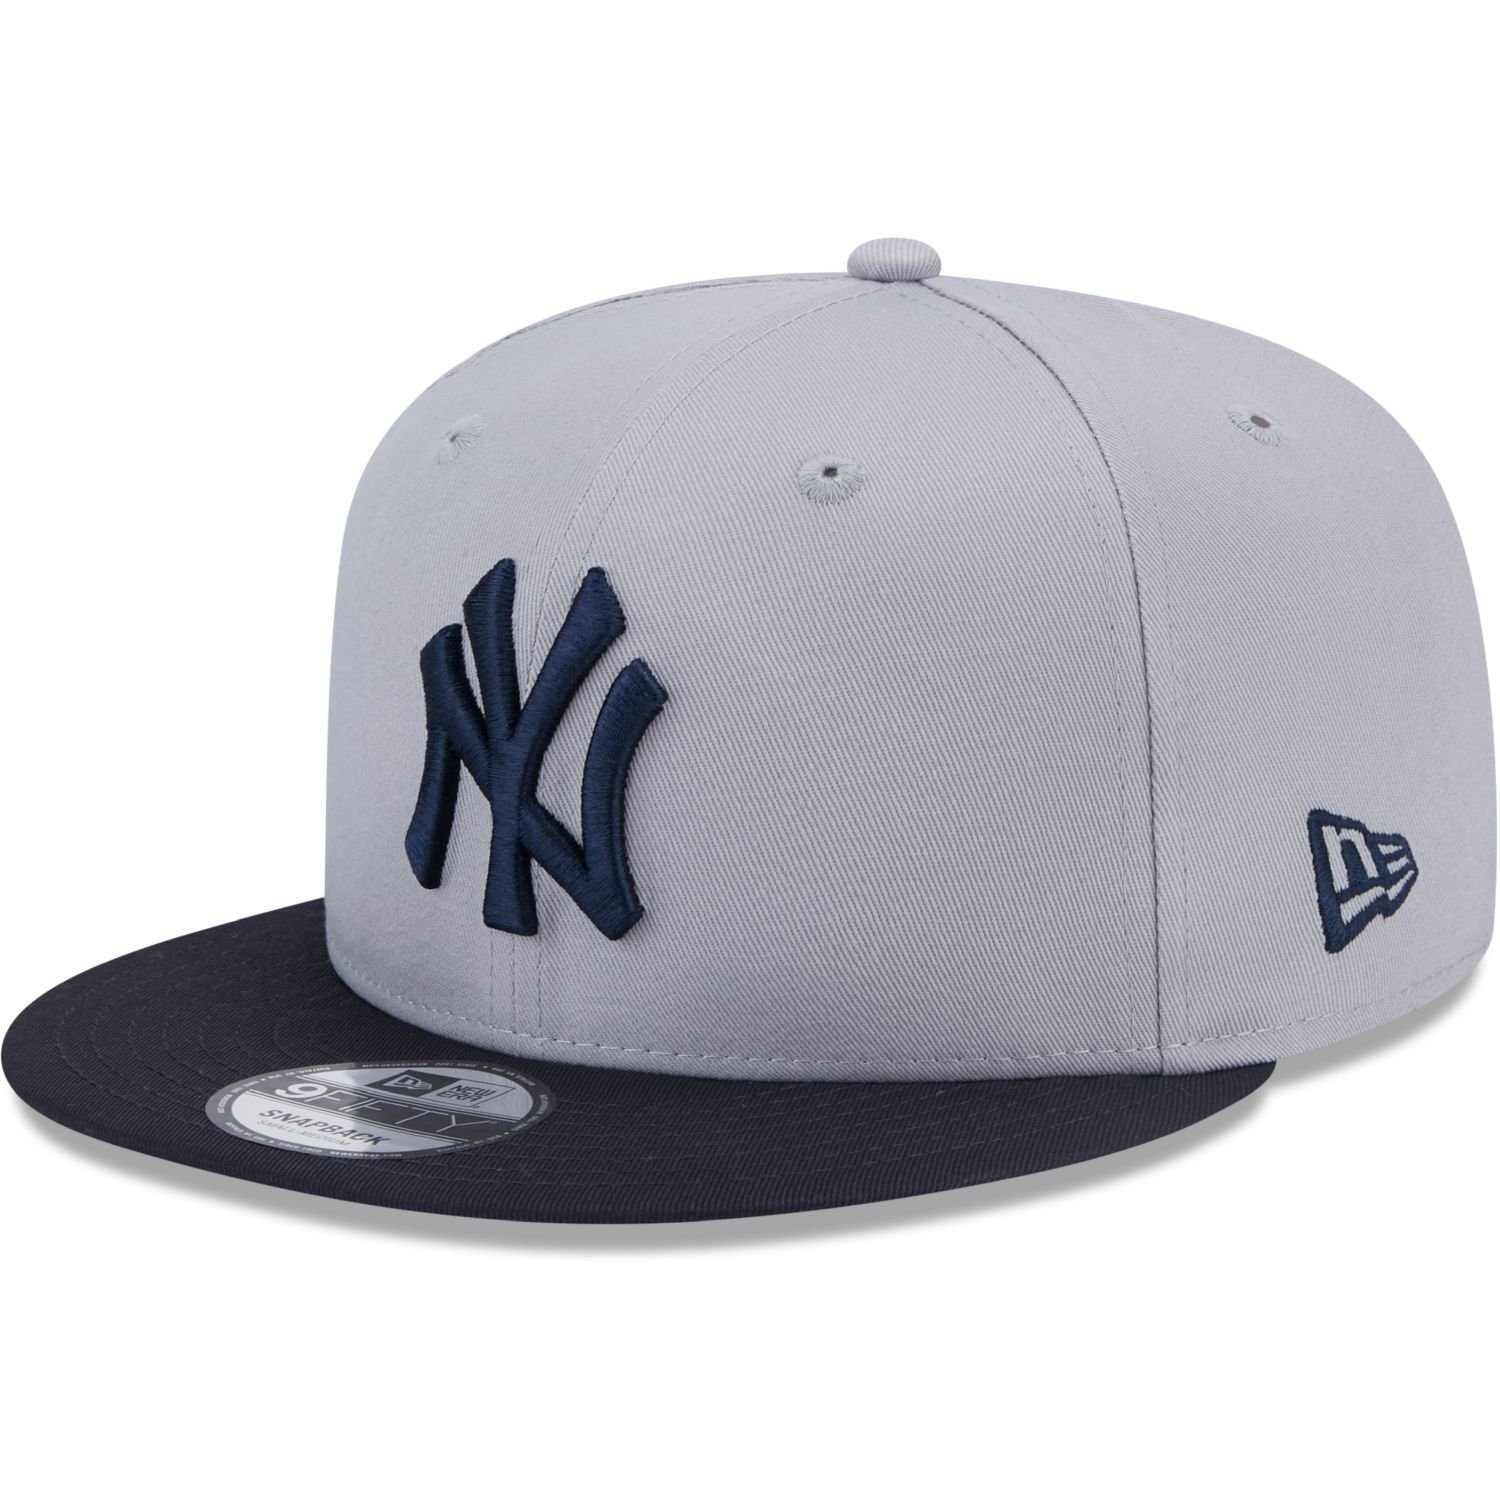 SIDEPATCH New Cap New Yankees Era Snapback 9Fifty York